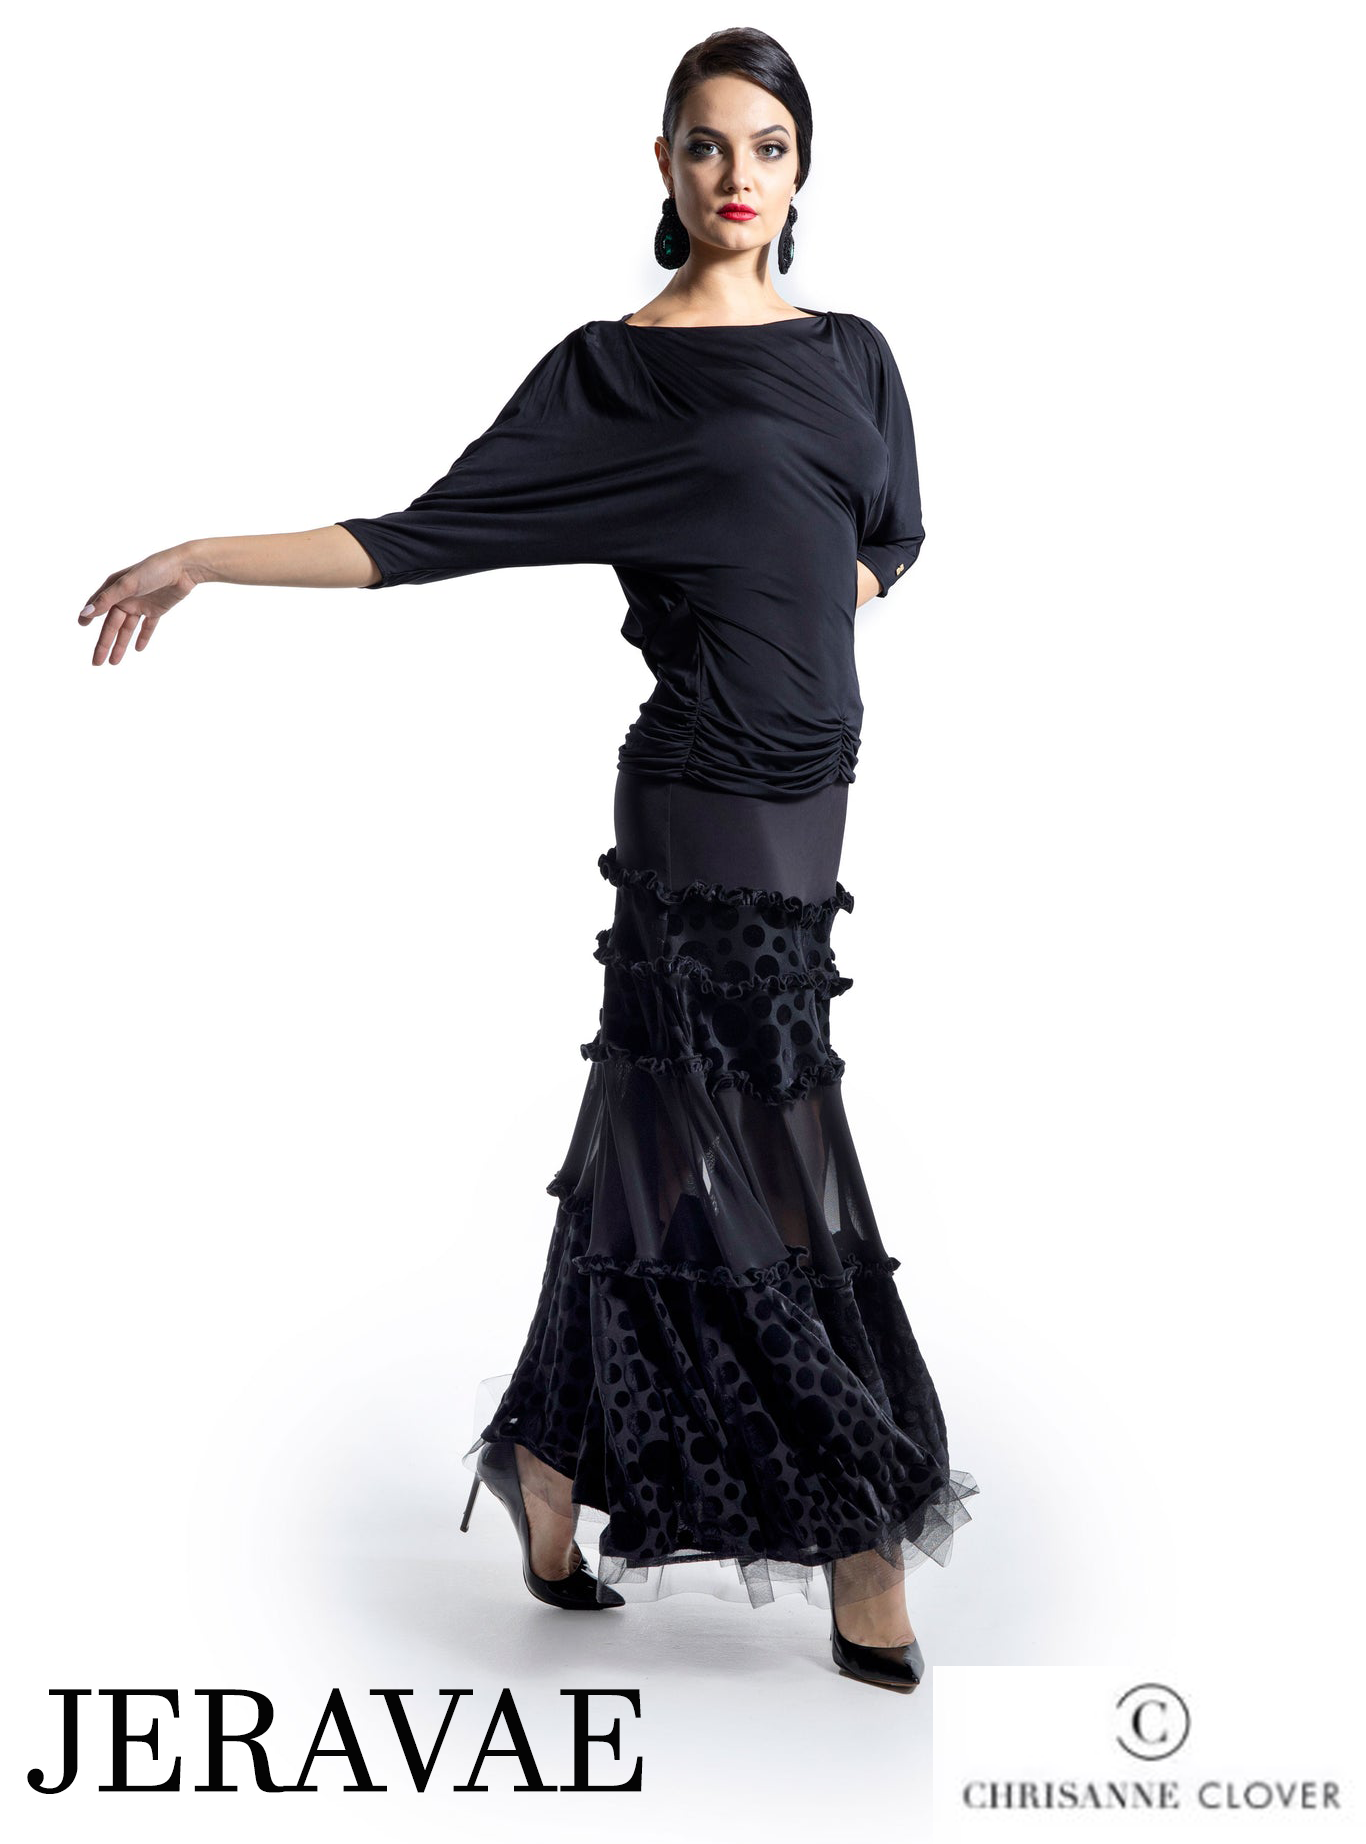 Chrisanne Clover ladies' black dance top with dolman sleeves